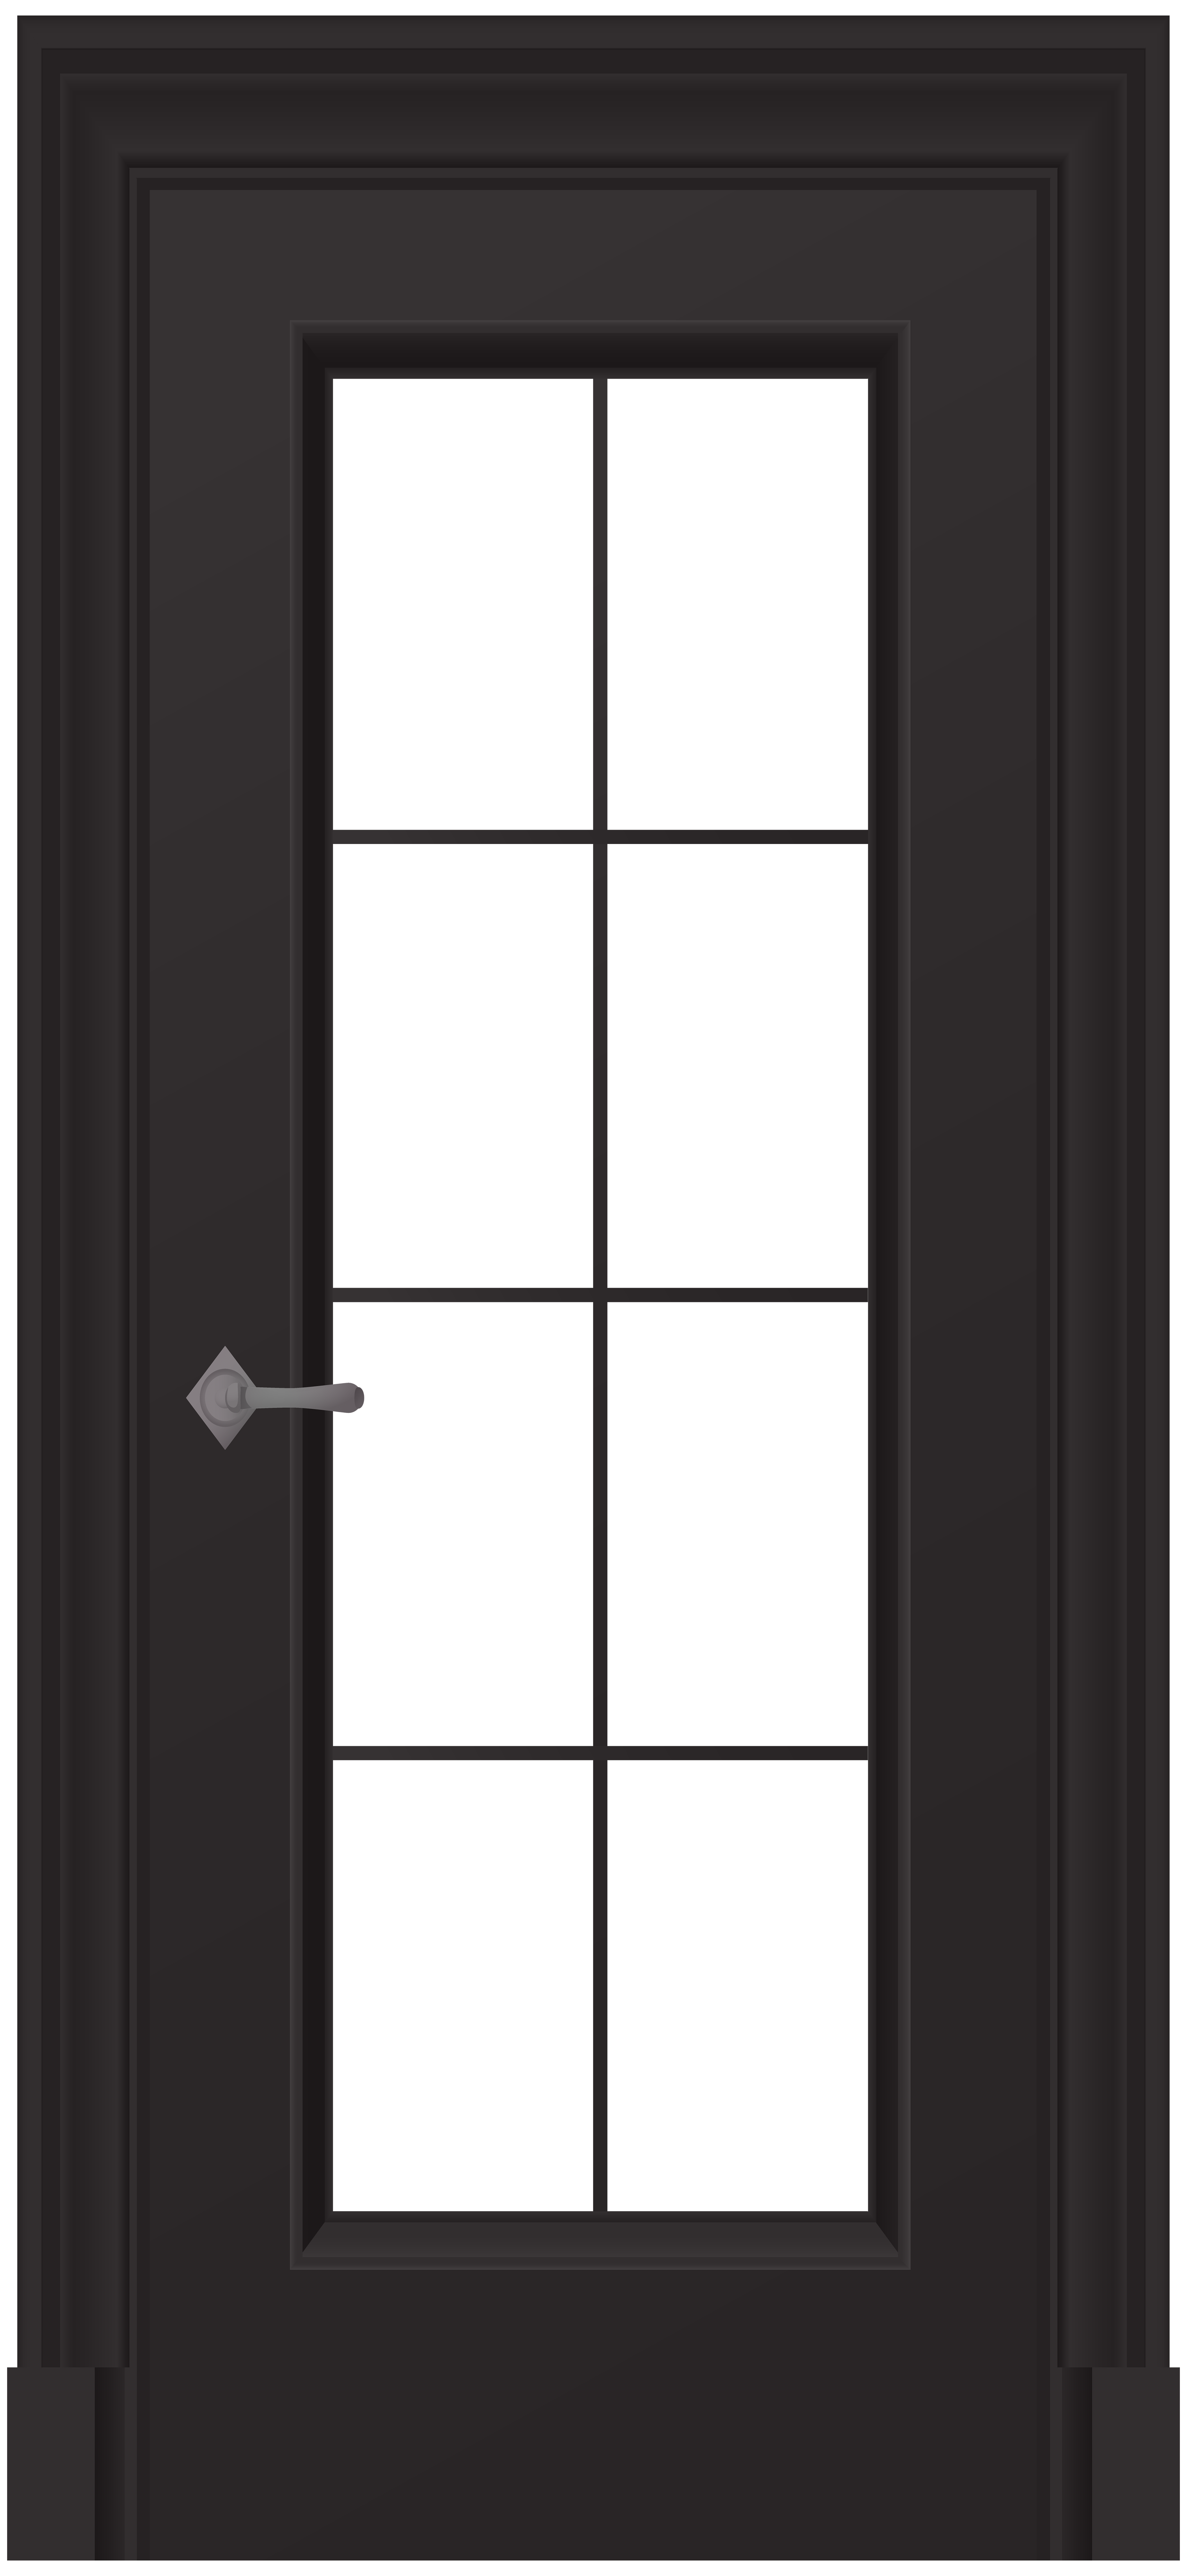 Black Door PNG Clip Art - Best WEB Clipart